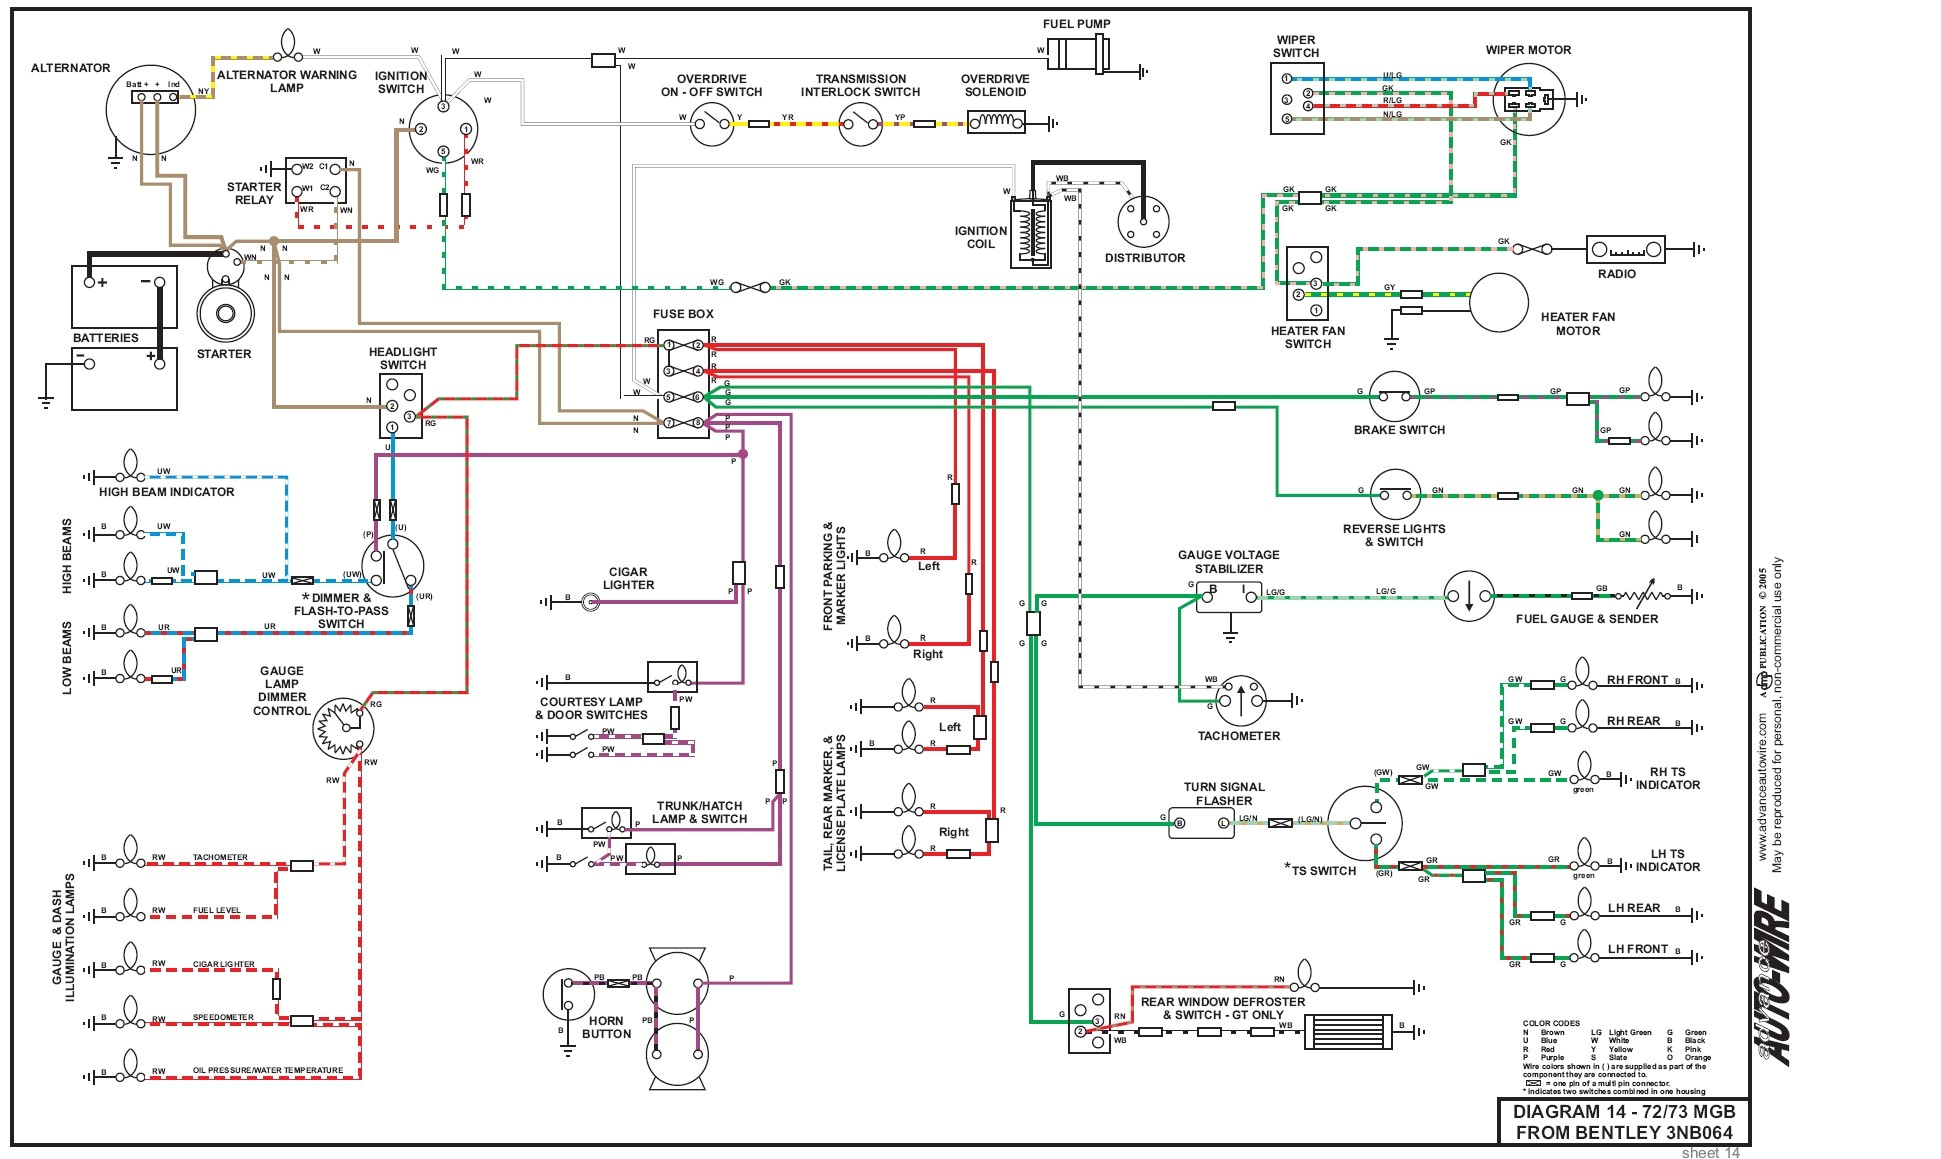 1976 mgb fuse box diagram wiring diagram page 1976 mgb fuse box diagram wire management